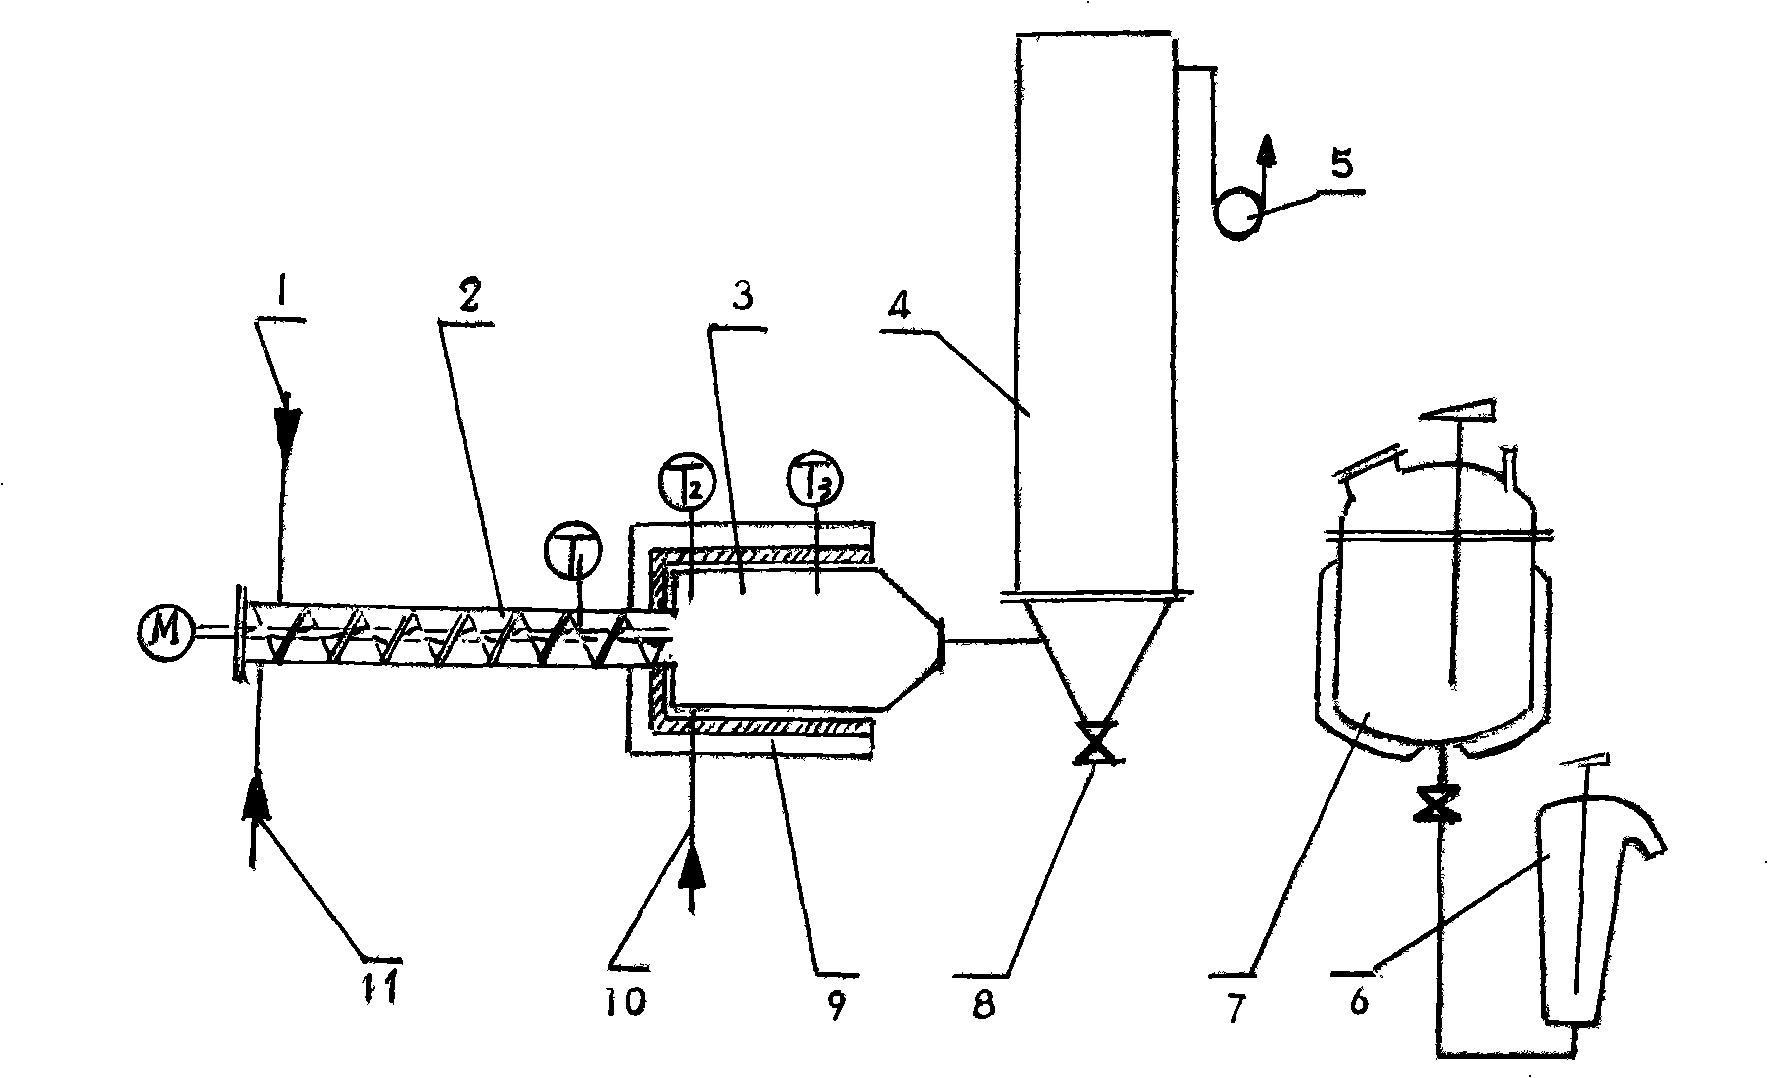 Duplicating machine and laser printer color toner manufacturing technique